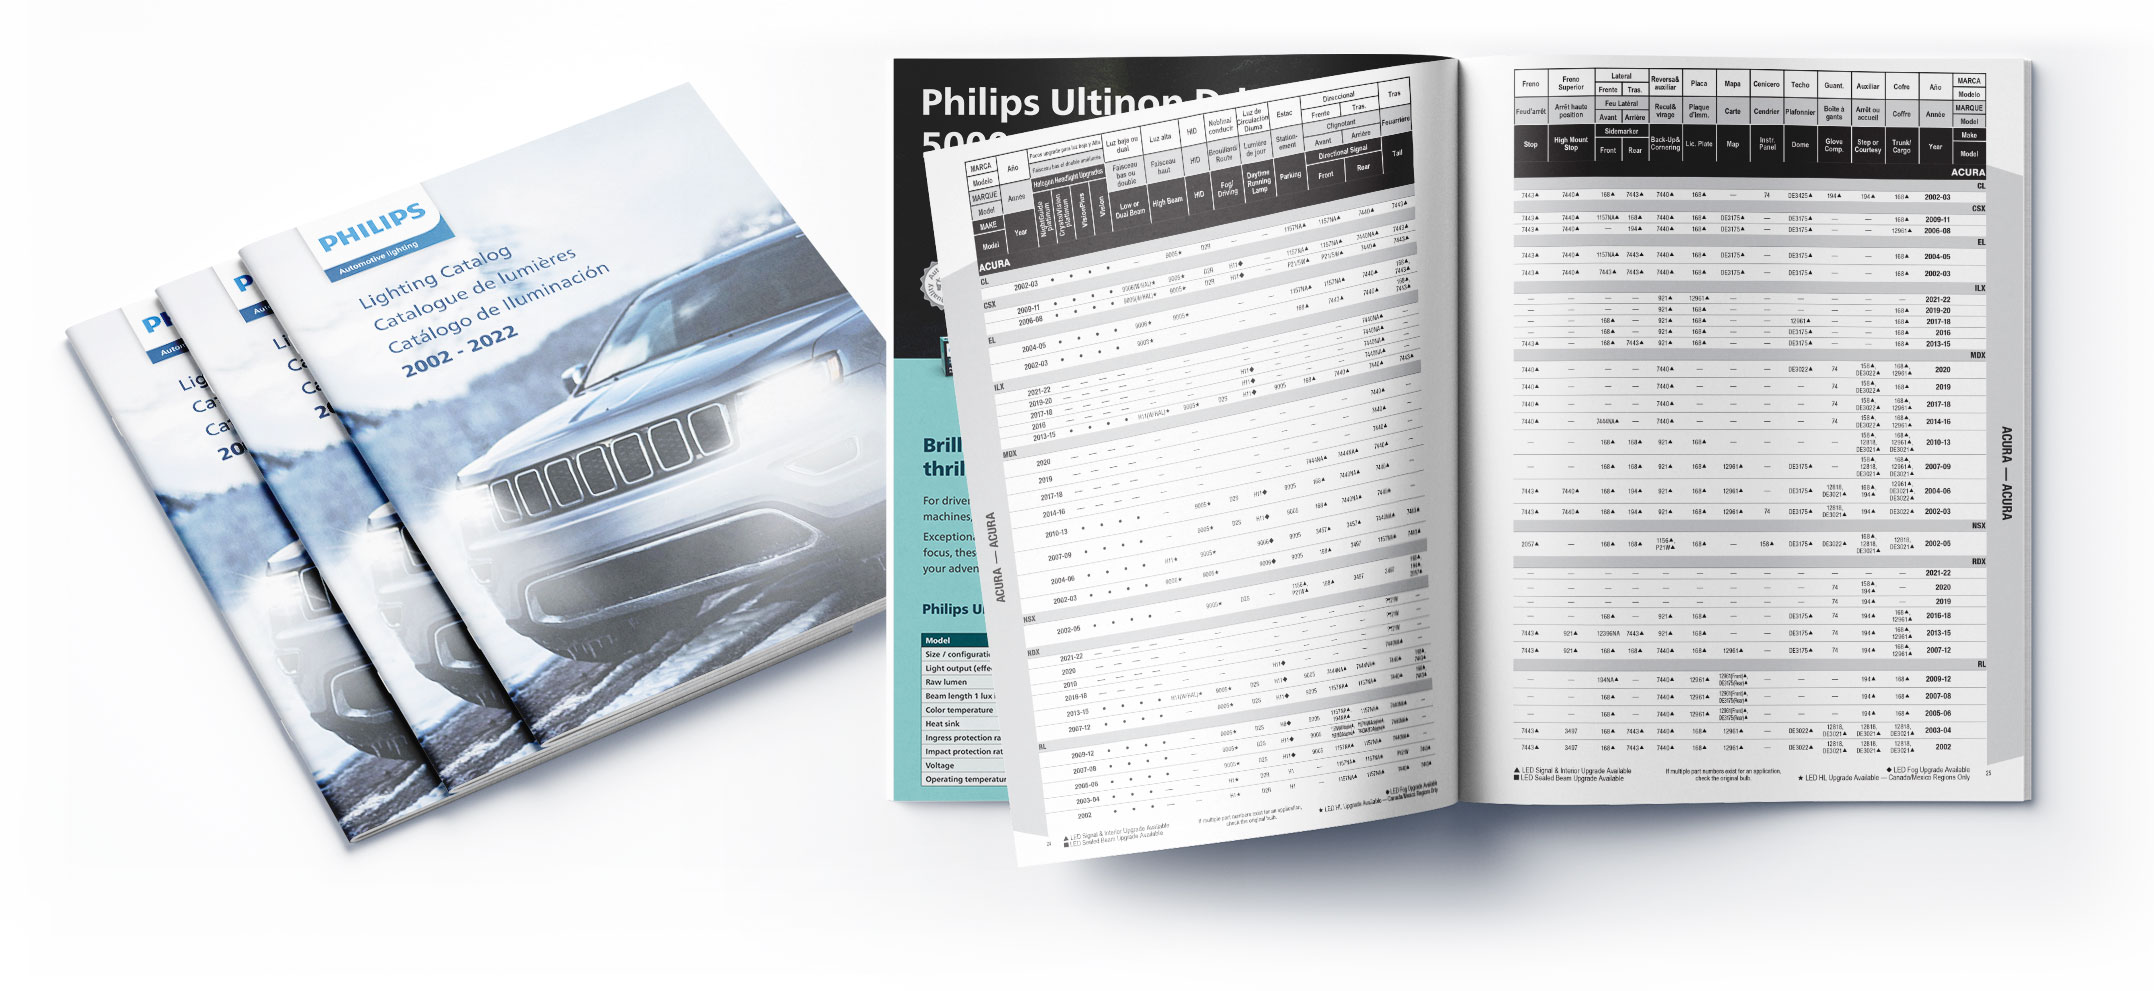 philips-catalog-spreads